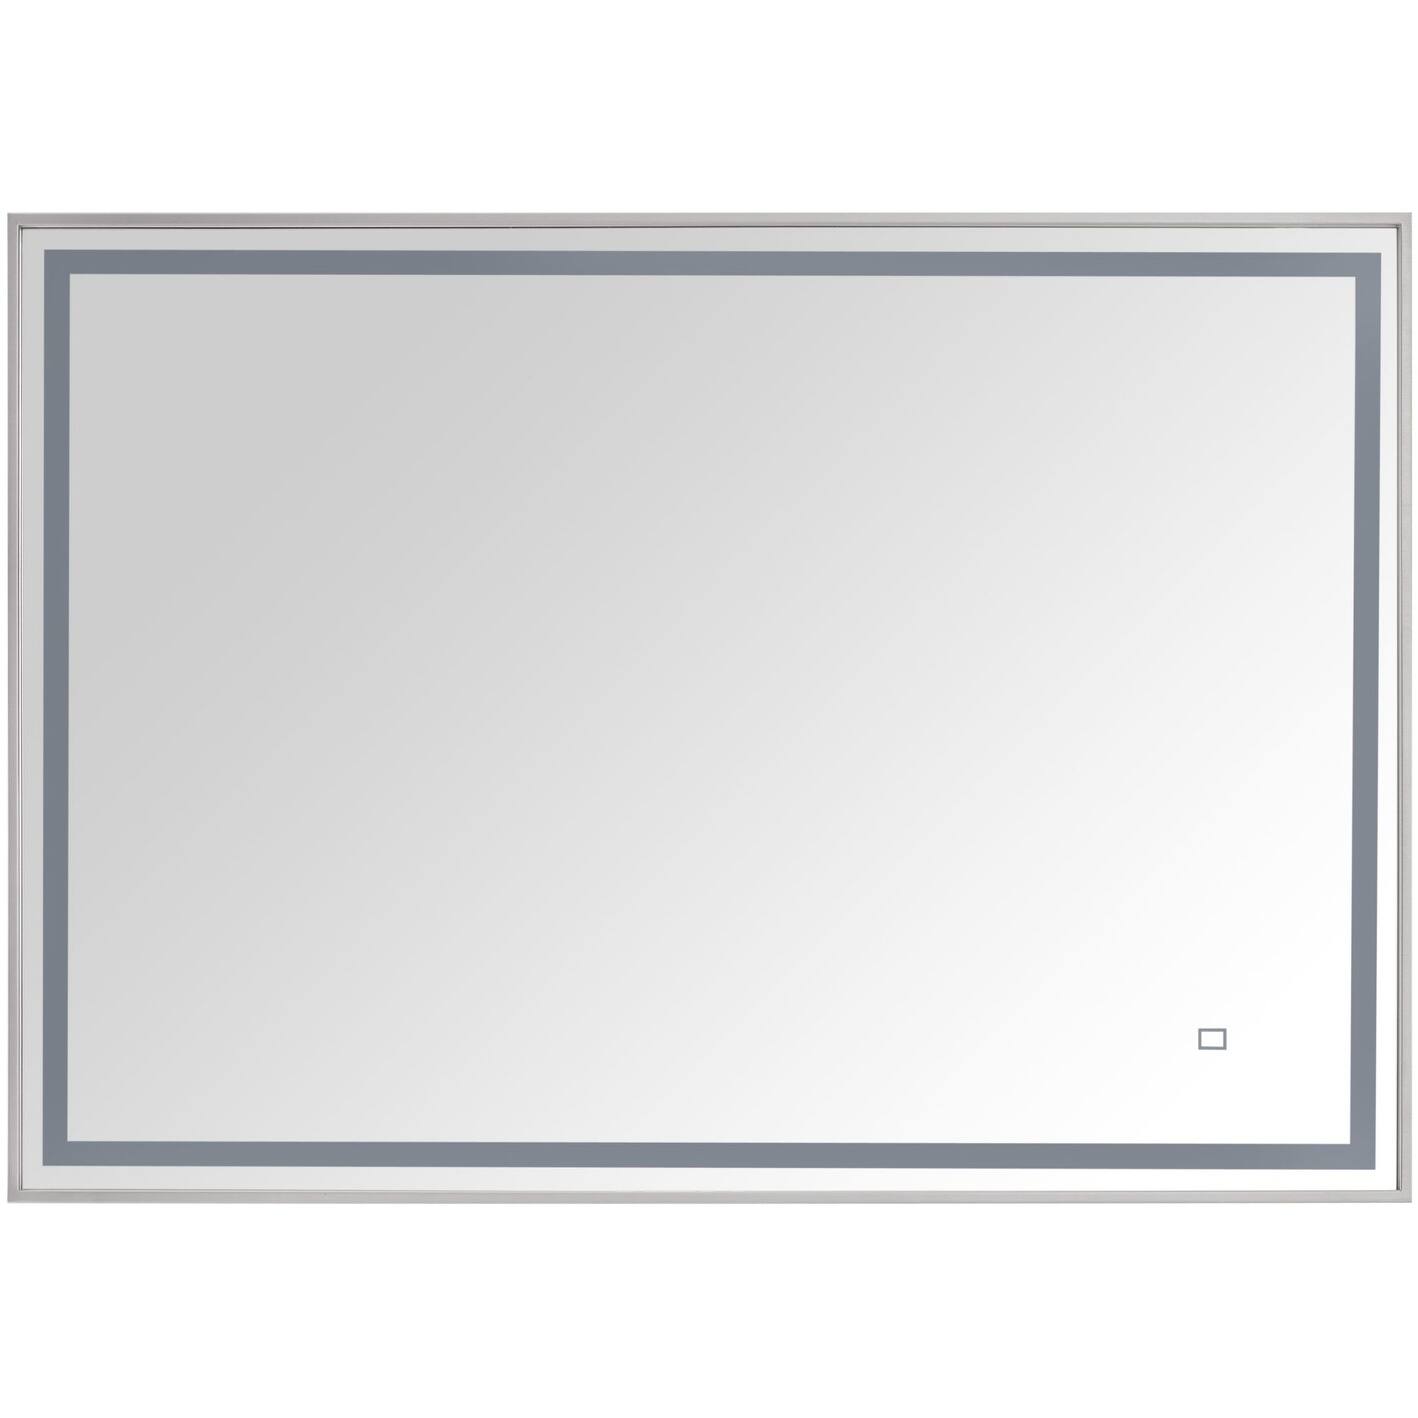 Avanity LED-M39 LED 27-9/16" x 39-3/8" Framed Bathroom Mirror with LED